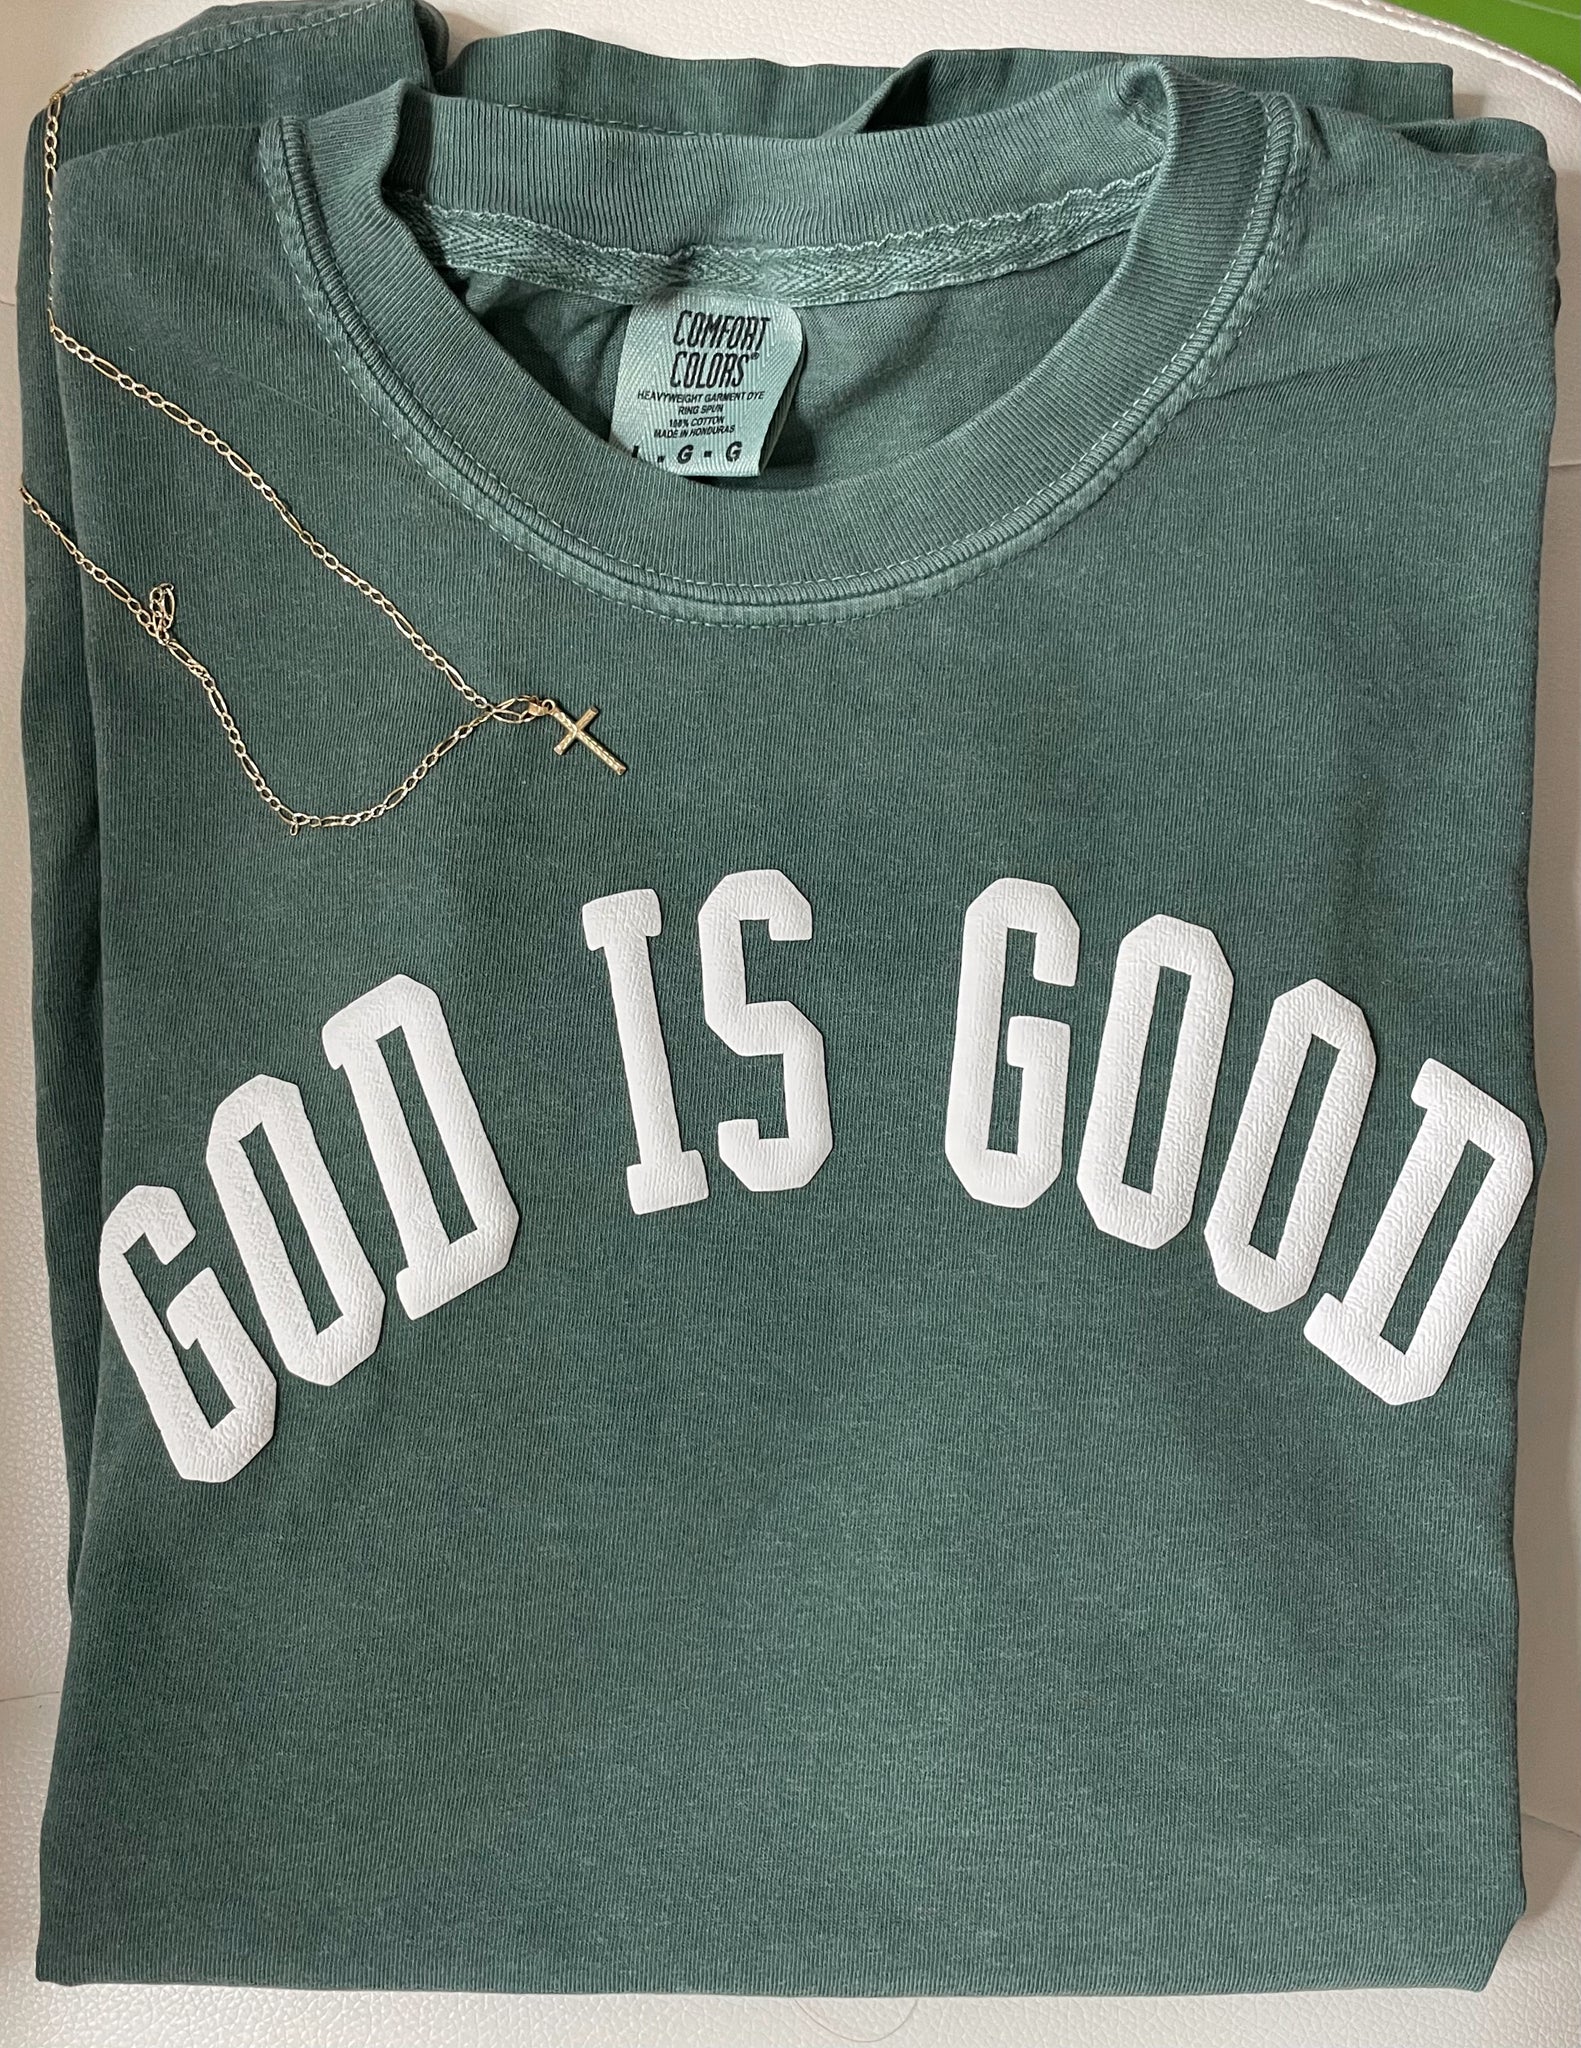 God is good | comfort colors puff print - Apparel for God LLC